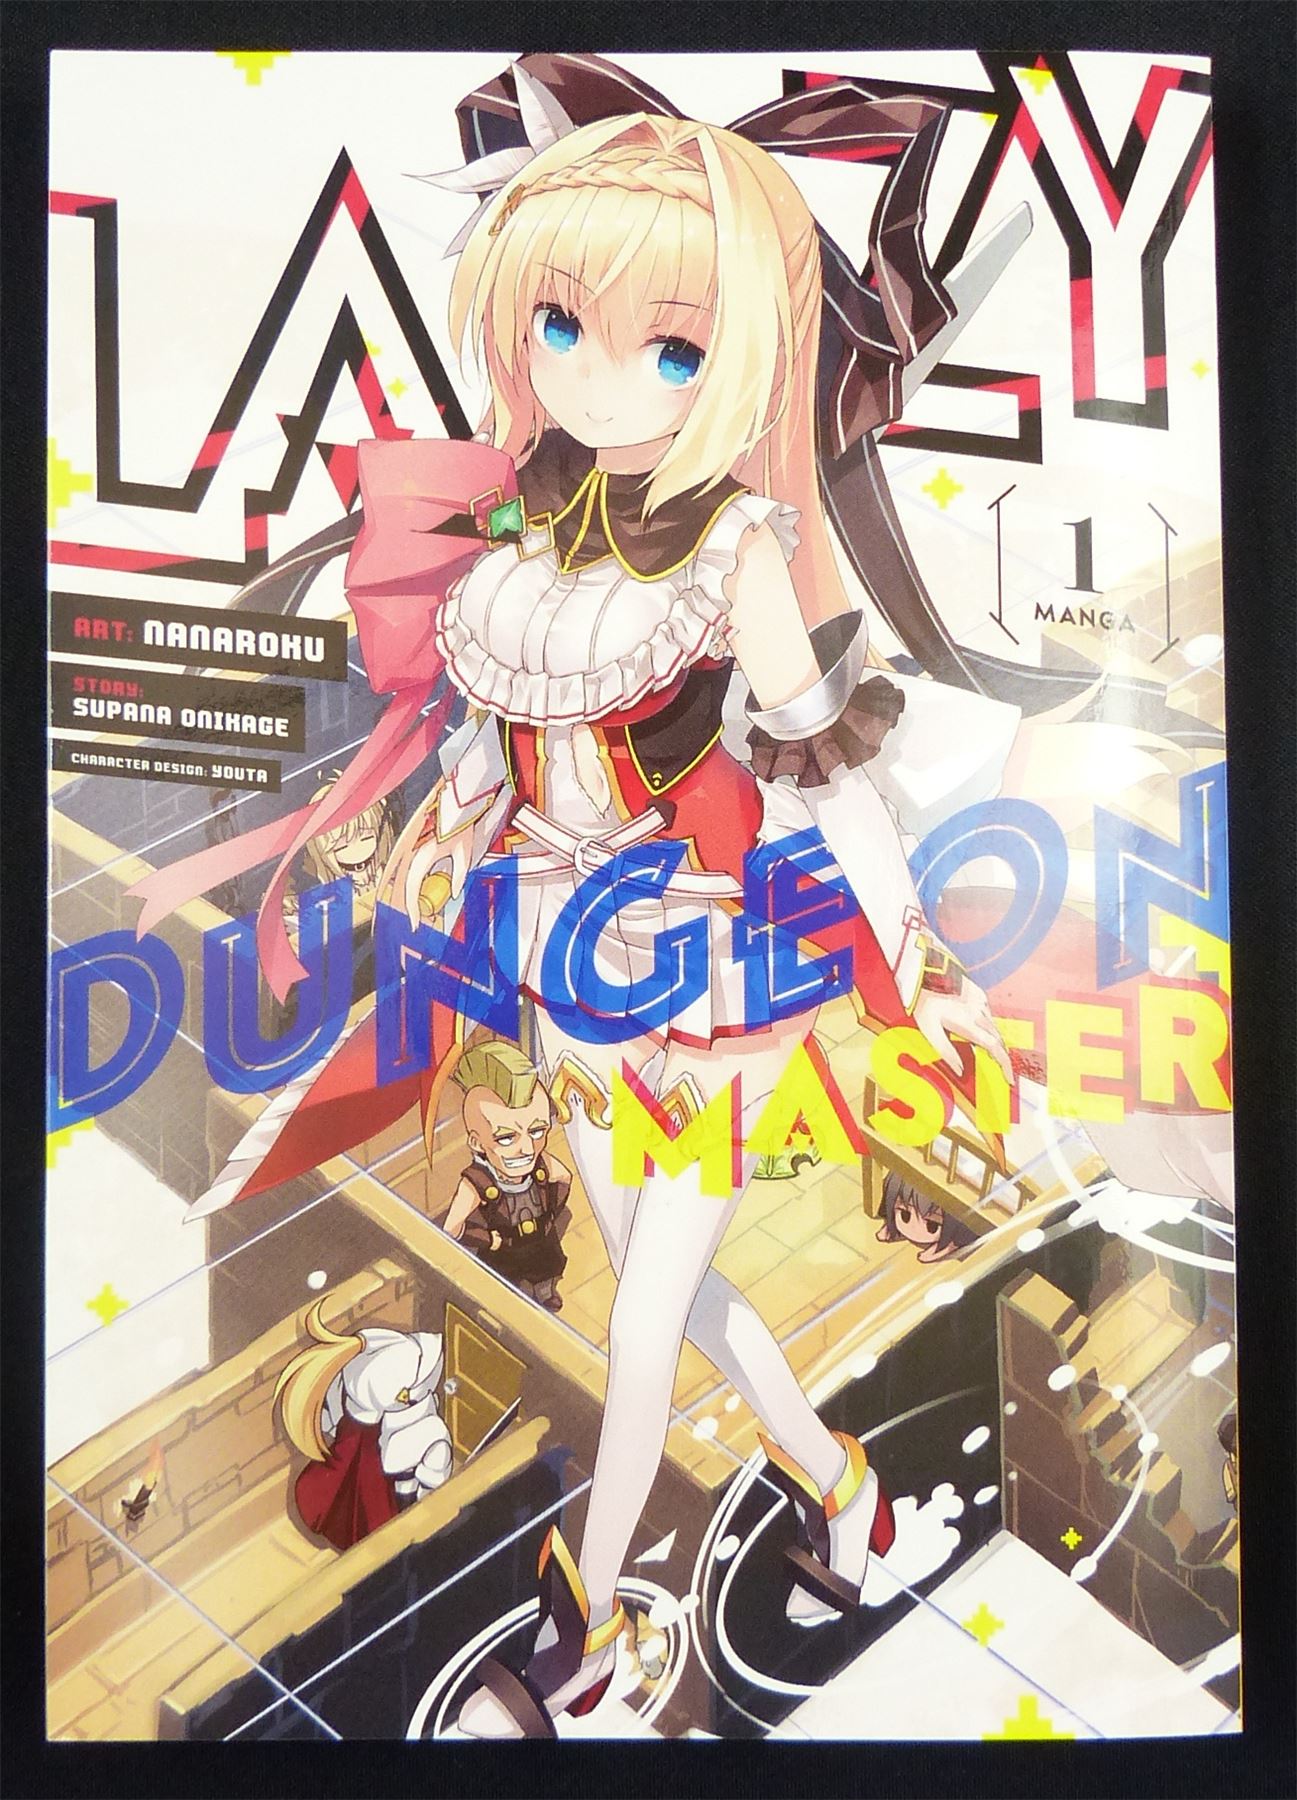 LAZY Dungeon Master vol 1 - Seven Seas Manga #FG